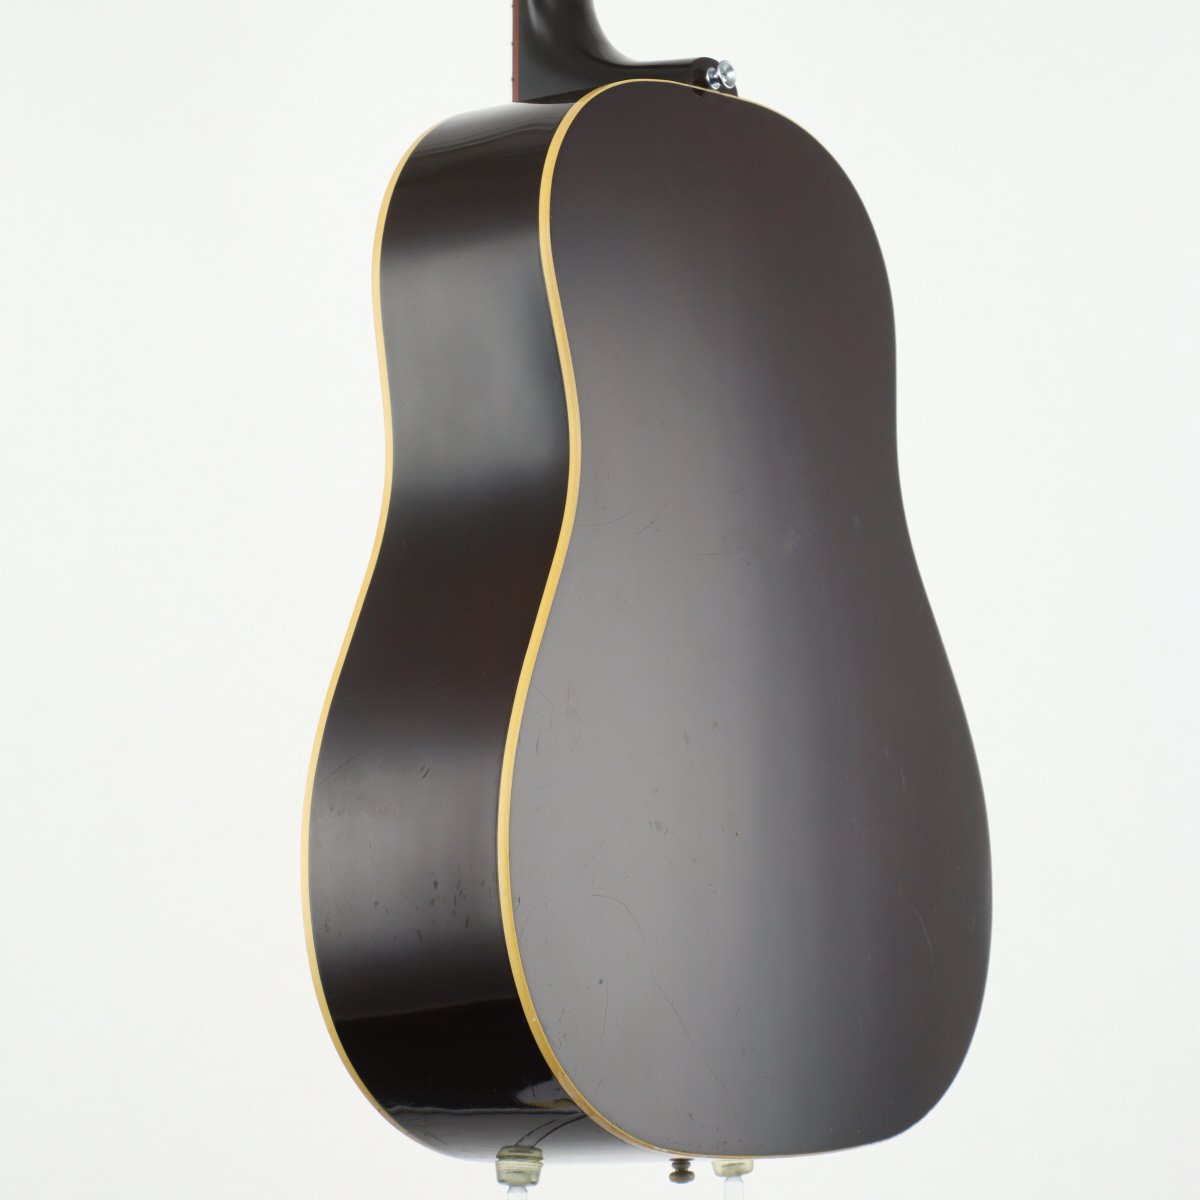 [SN 01382021] USED Gibson / 1963 J-45 VS 2002 [12]